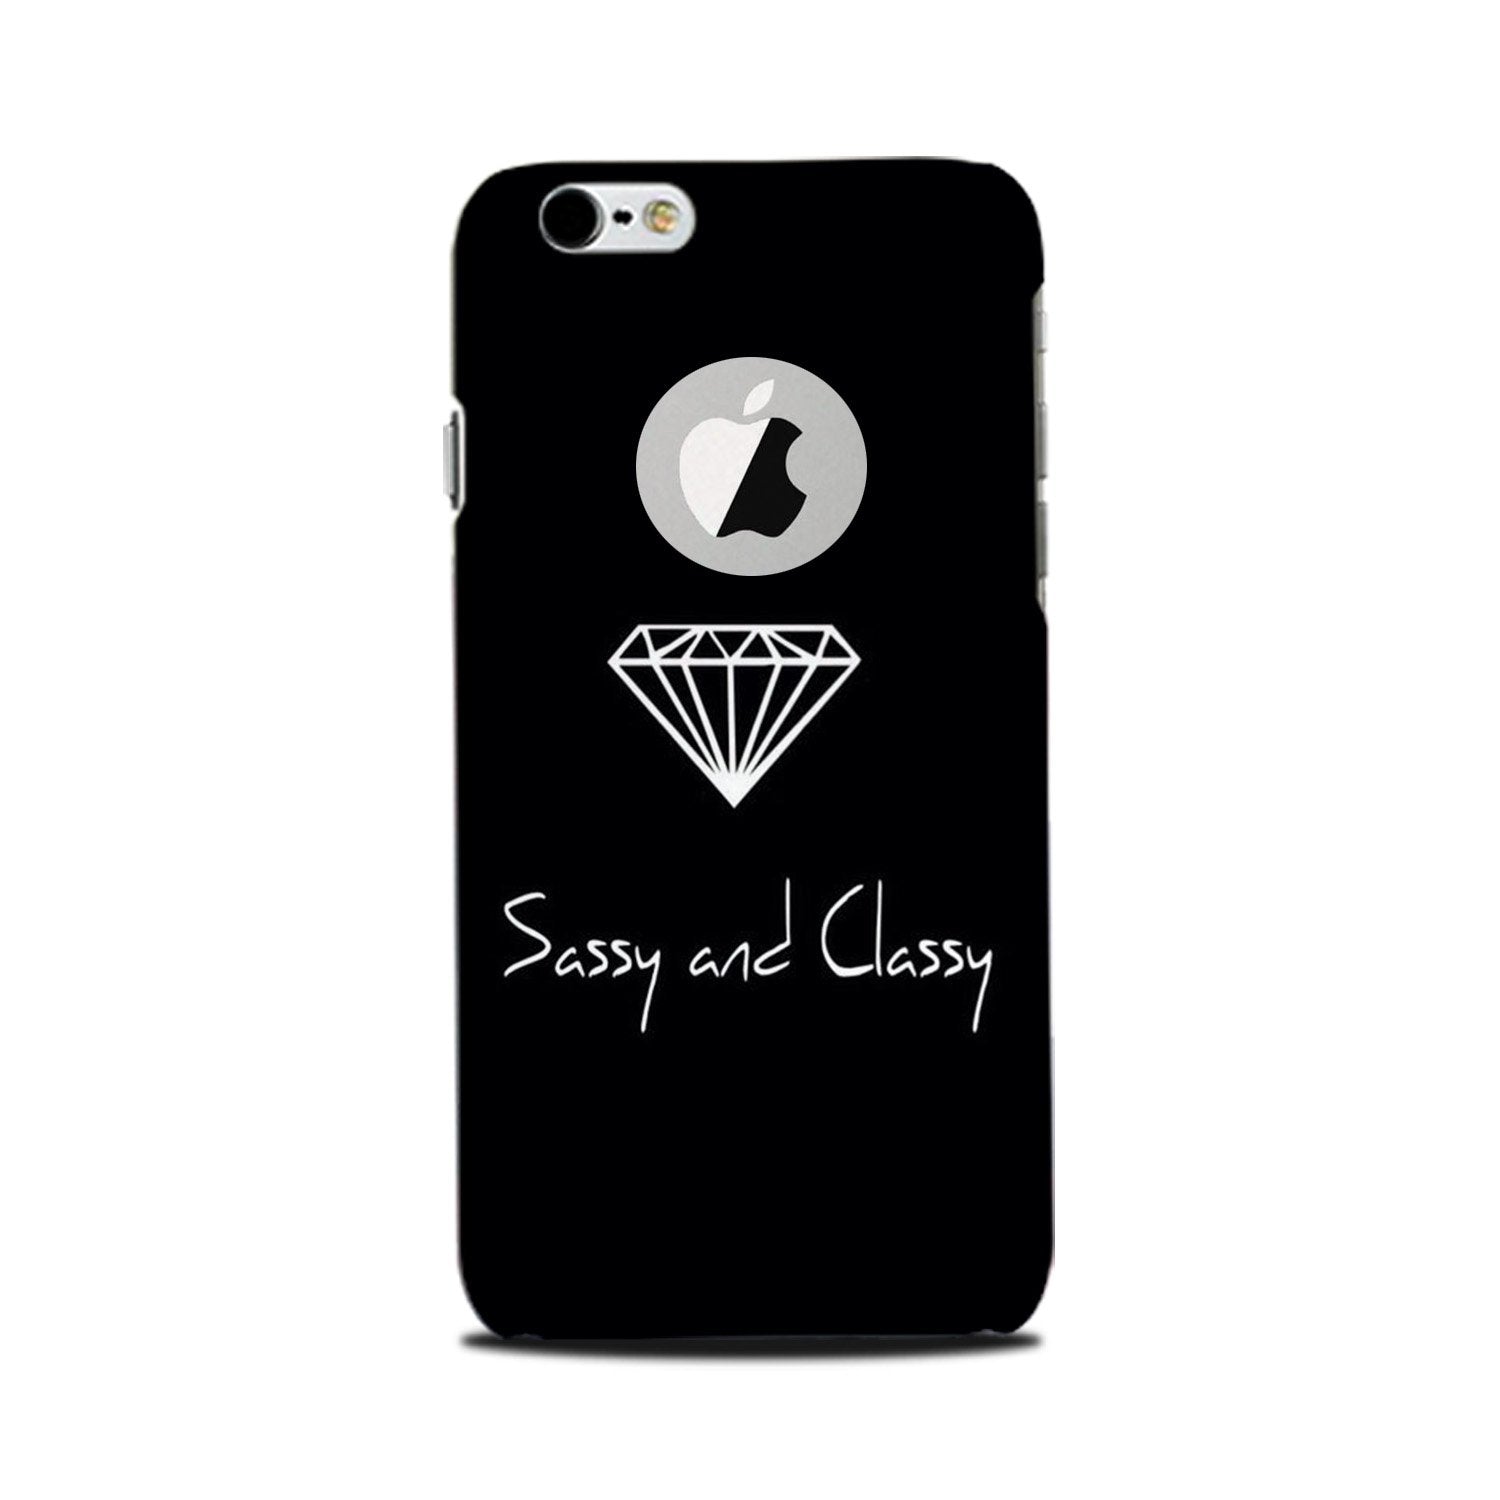 Sassy and Classy Case for iPhone 6 Plus / 6s Plus logo cut(Design No. 264)